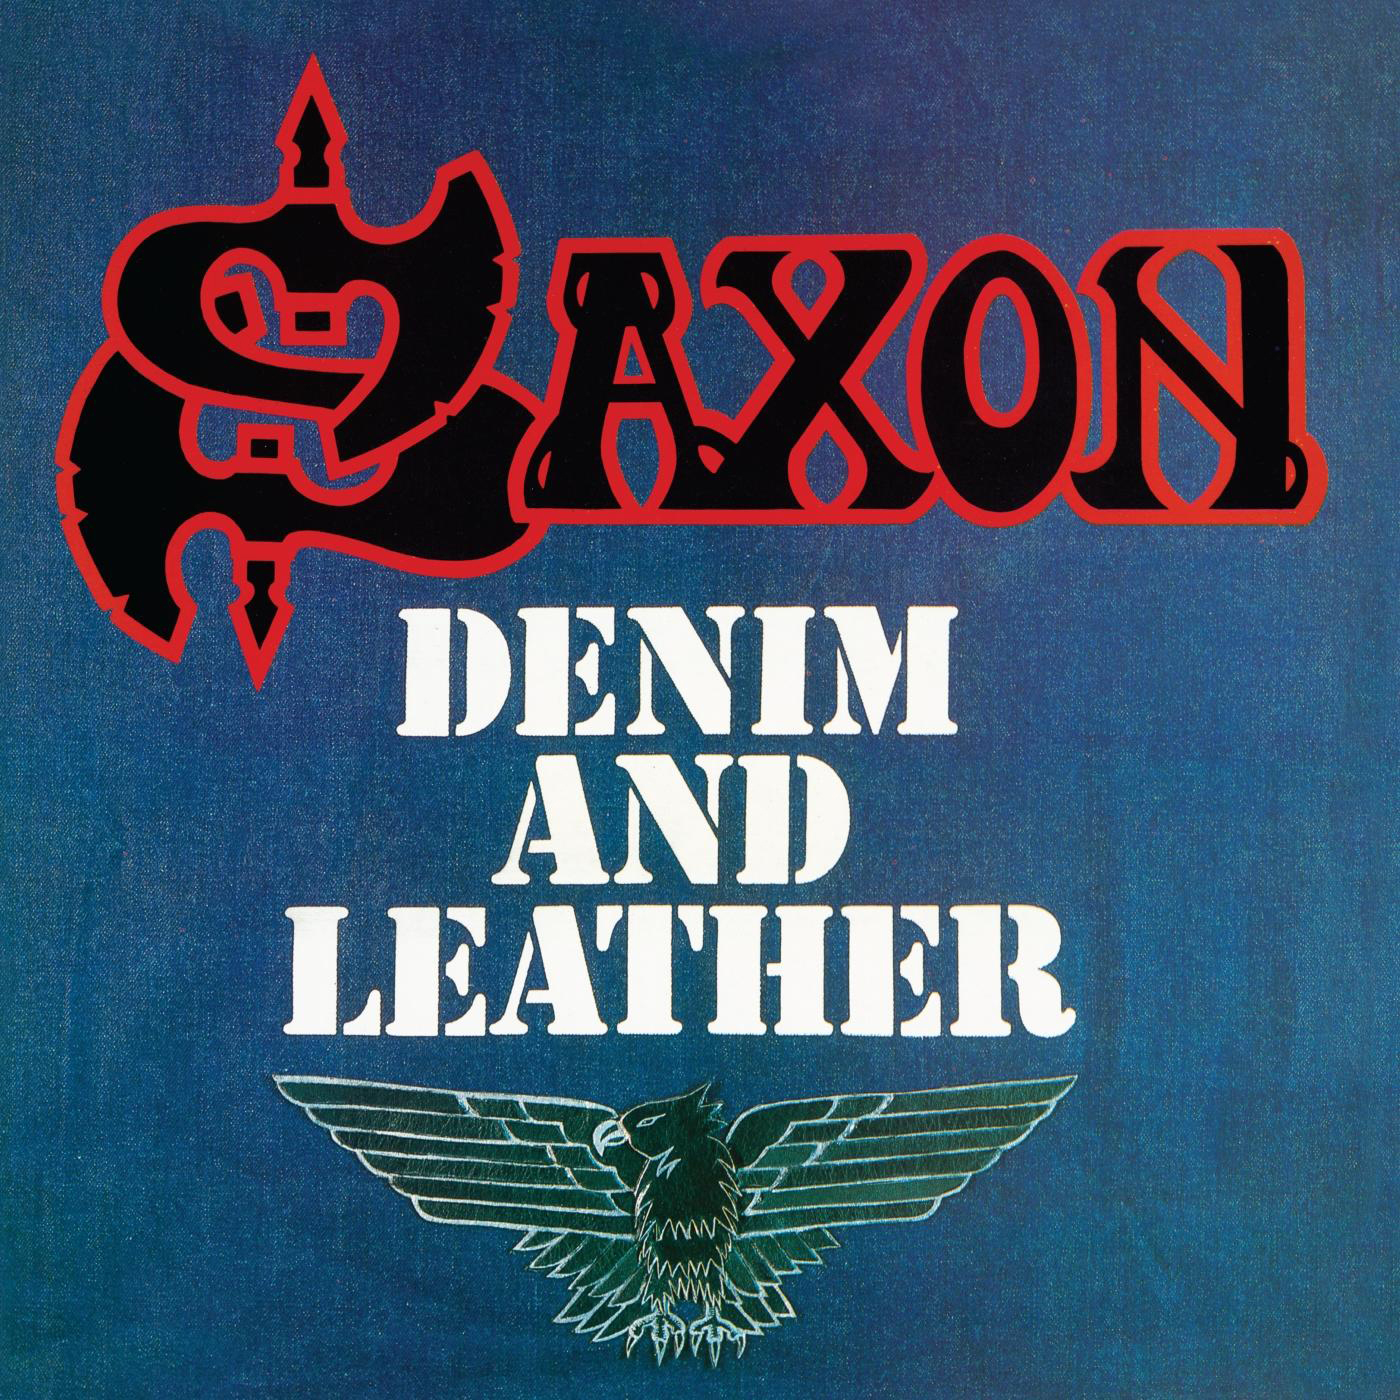 Saxon - Denim and (Vinyl) Leather 